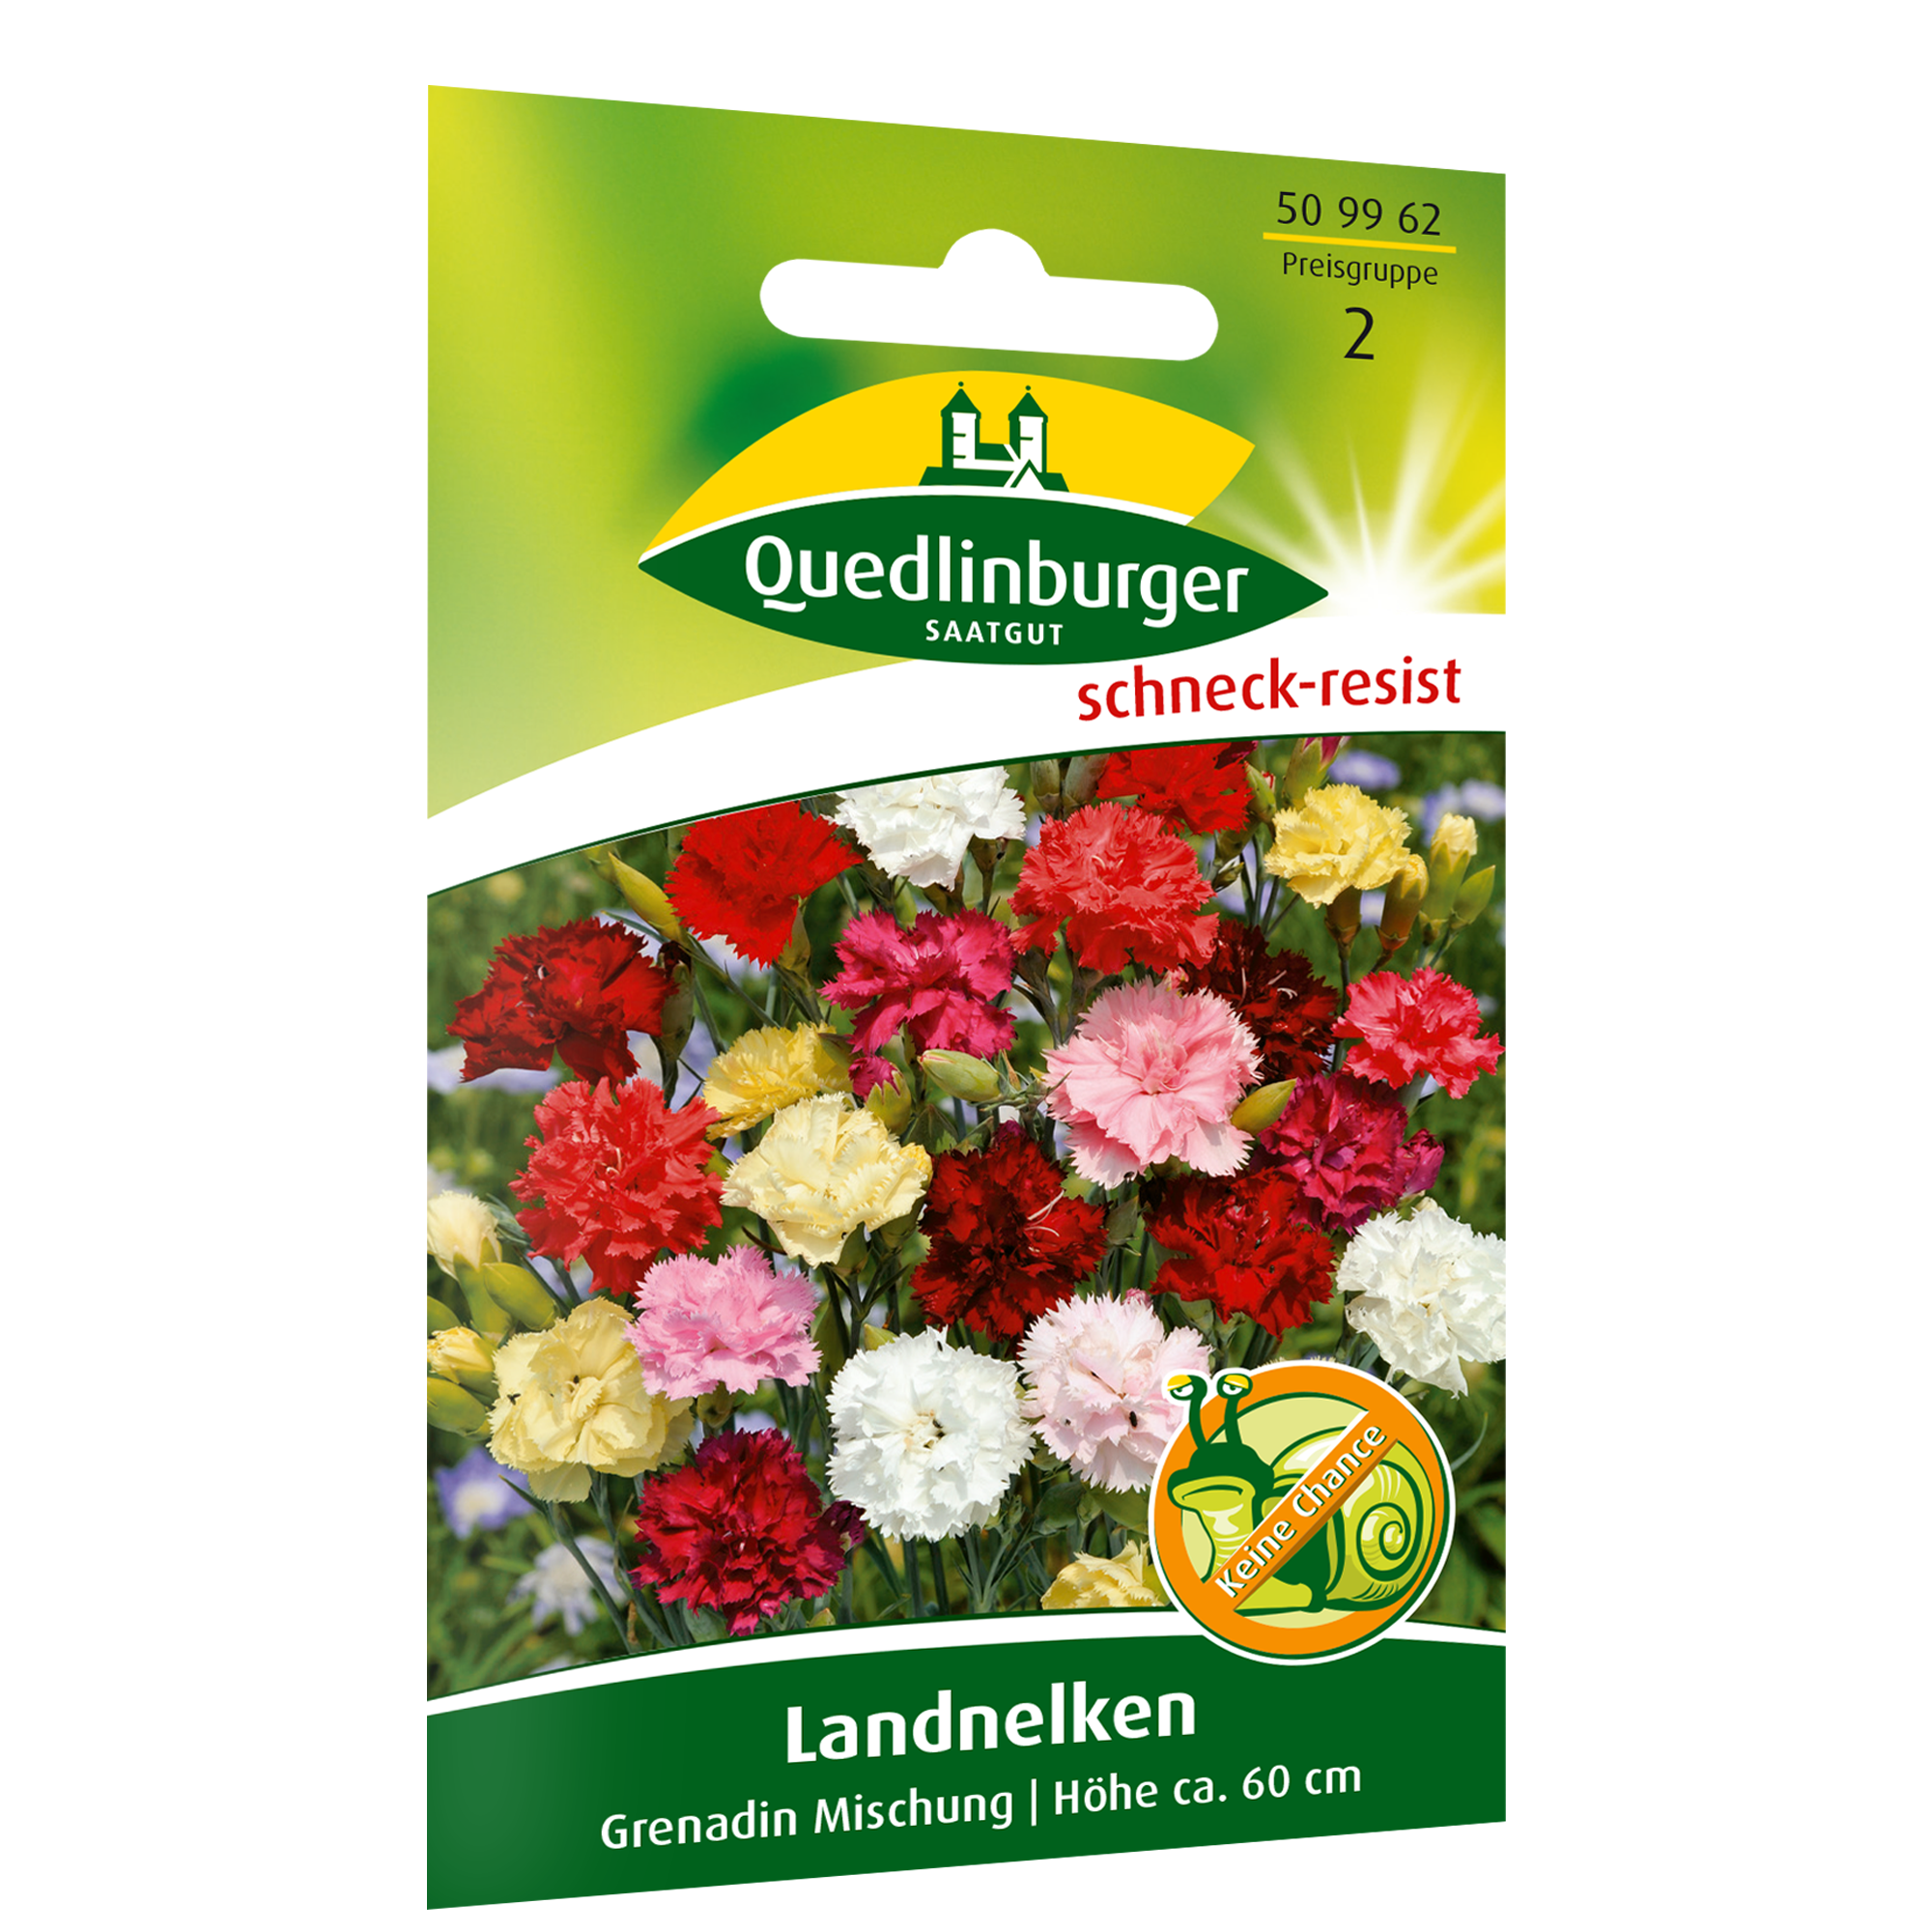 Landnelken 'Grenadin' Mischung + product picture